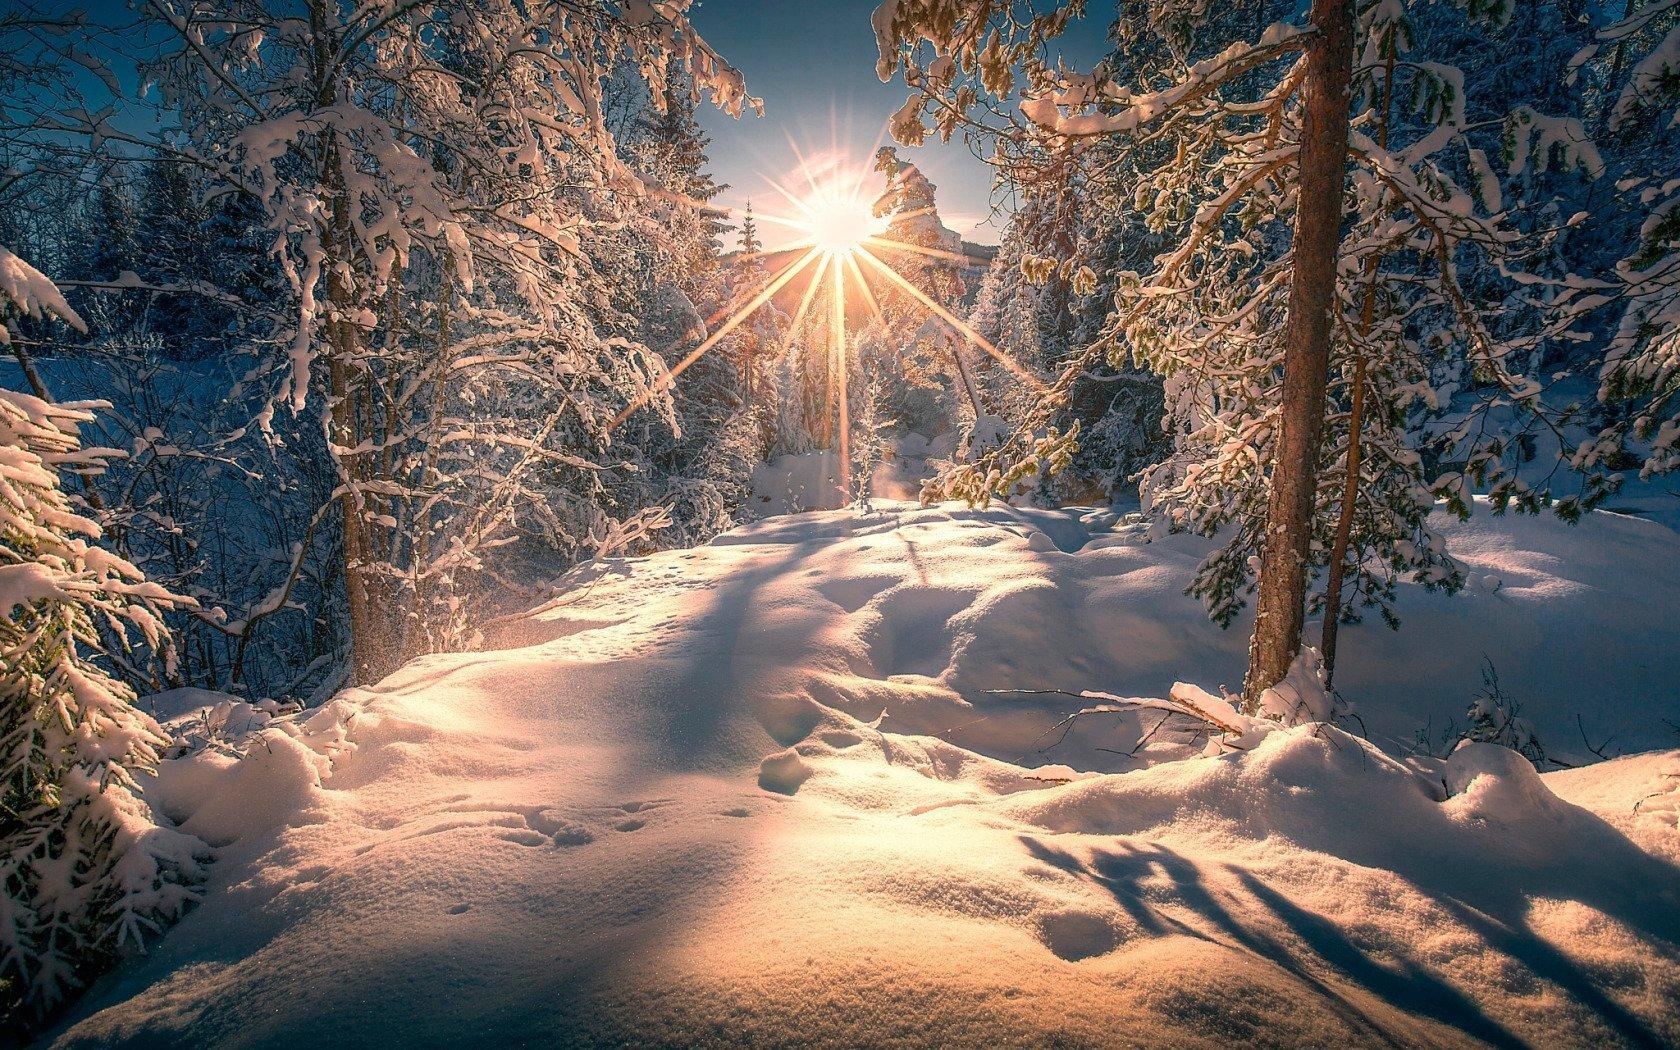 Солнце Зима Снег - Бесплатное фото на Pixabay - Pixabay